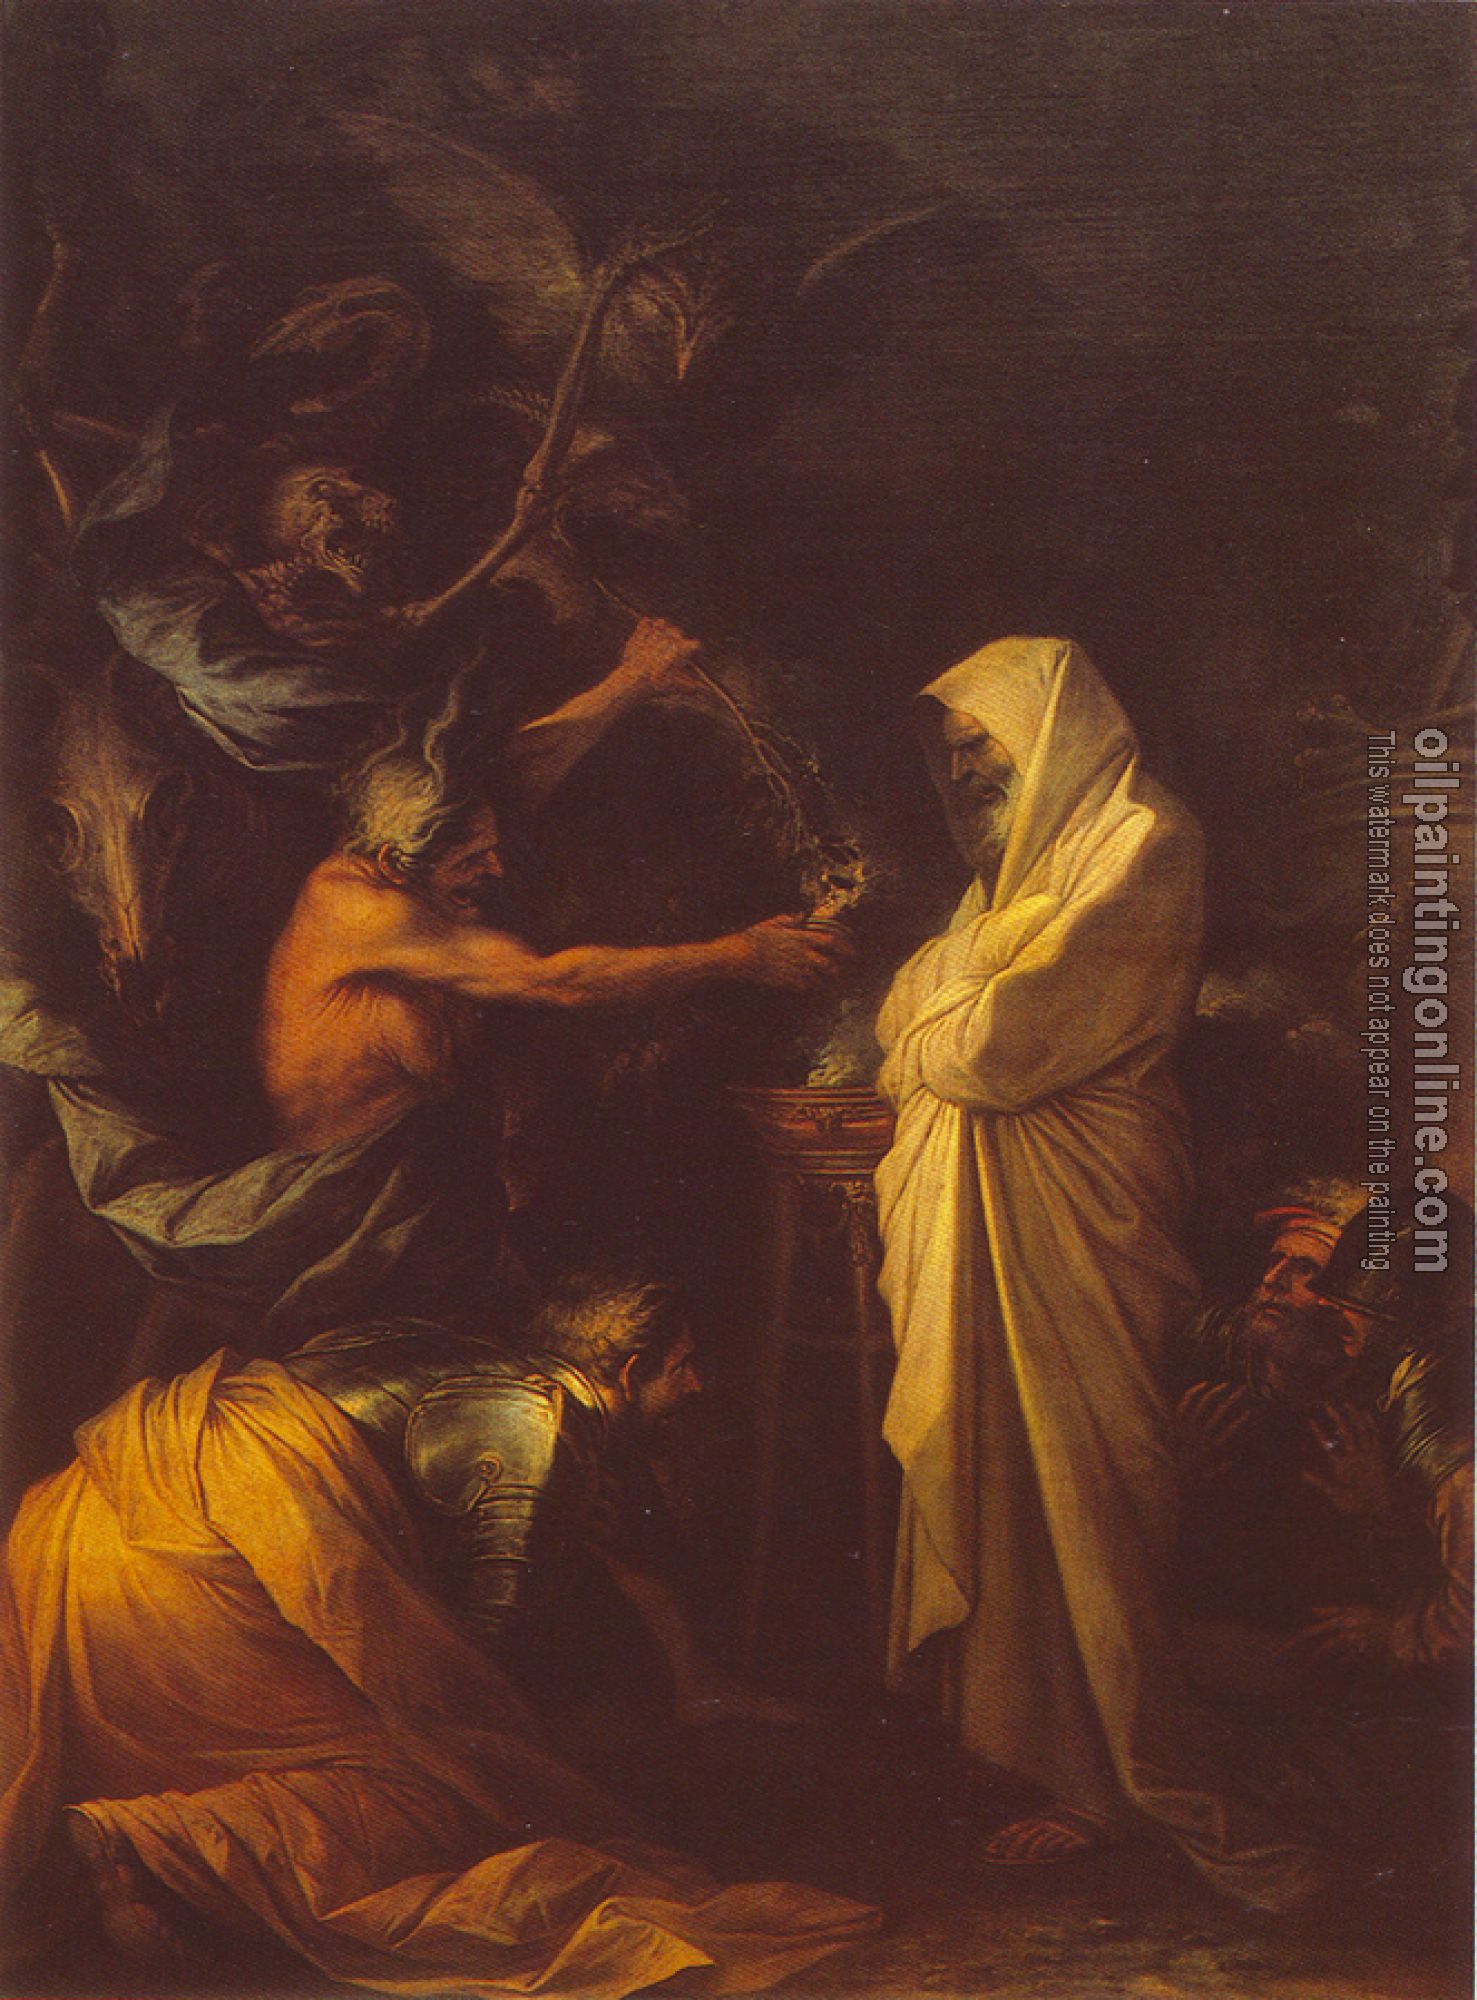 Rosa, Salvator - Apparition of the spirit of Samuel to Saul